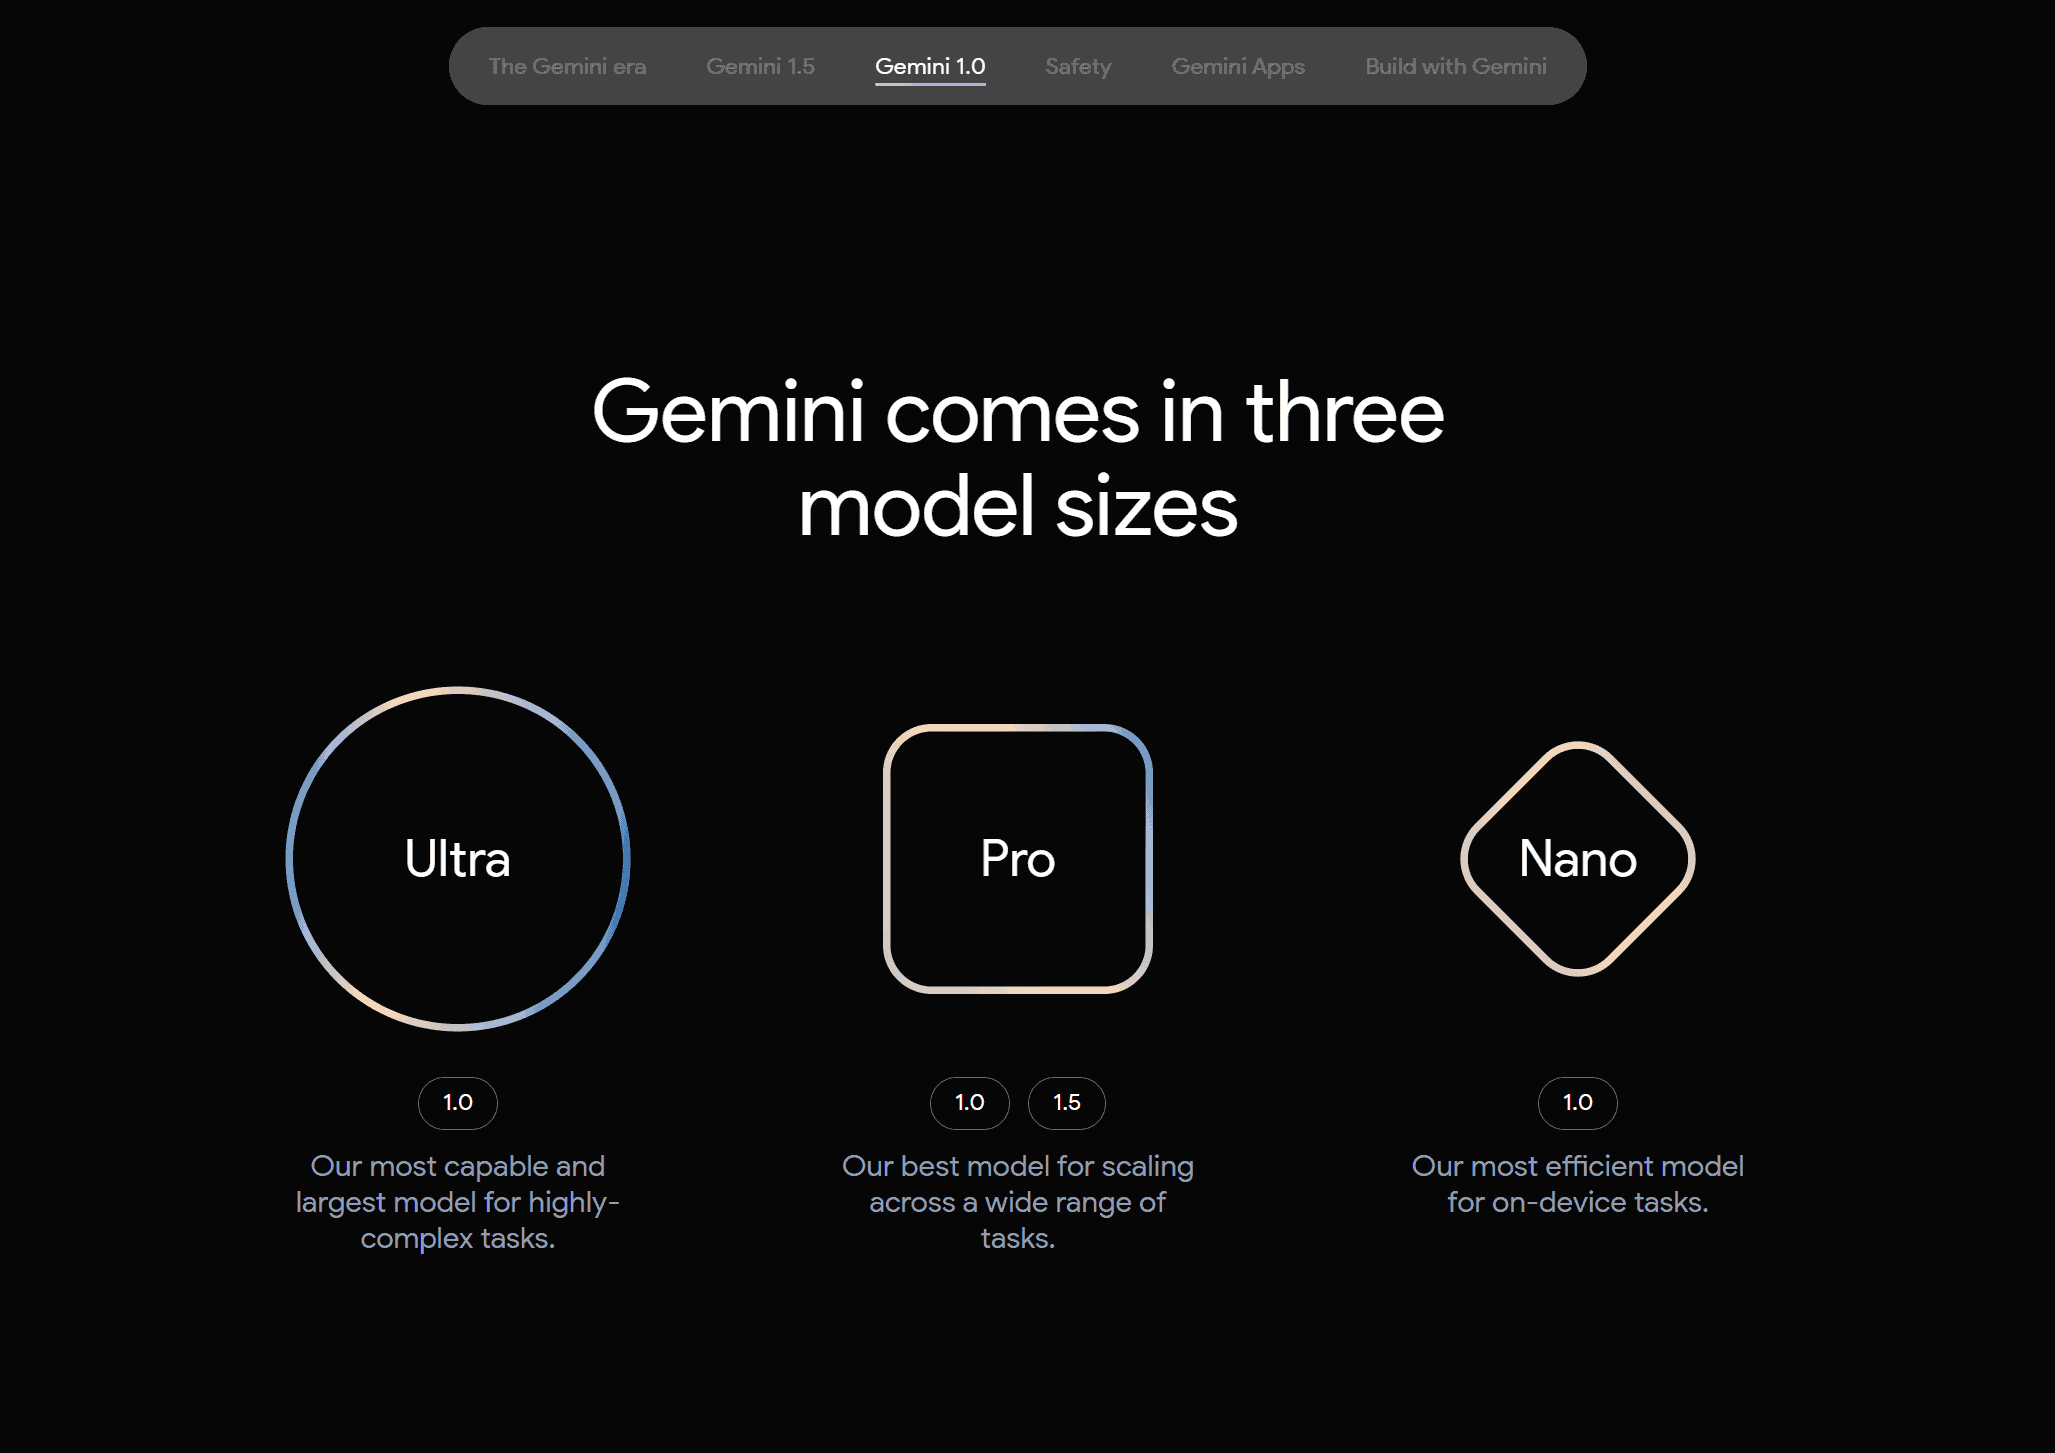 Gemini comes in three model sizes, but can Google Gemini 1.5 generate images?